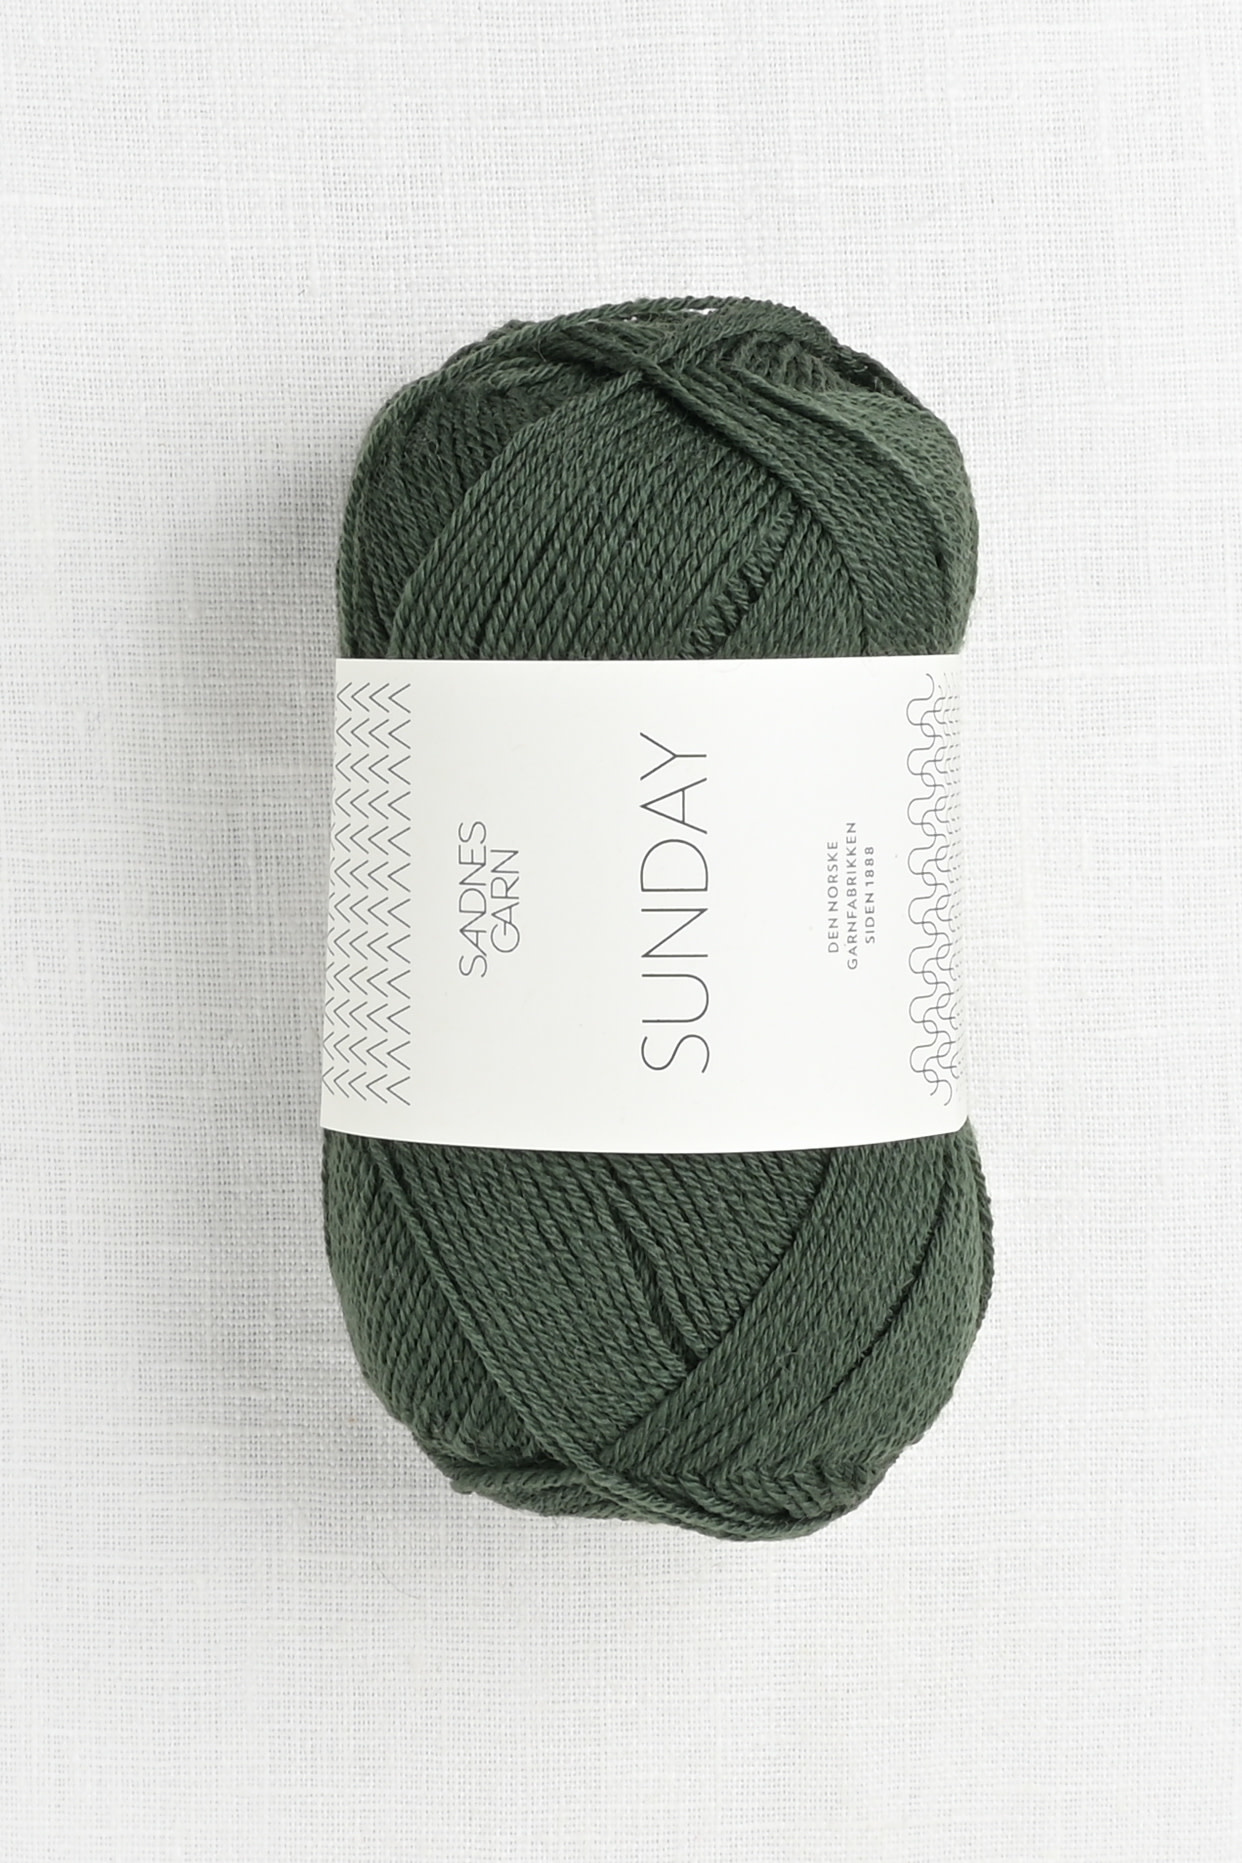 Ondartet Exert Sovesal Sandnes Garn Sunday 8082 Forest Green - Wool and Company Fine Yarn